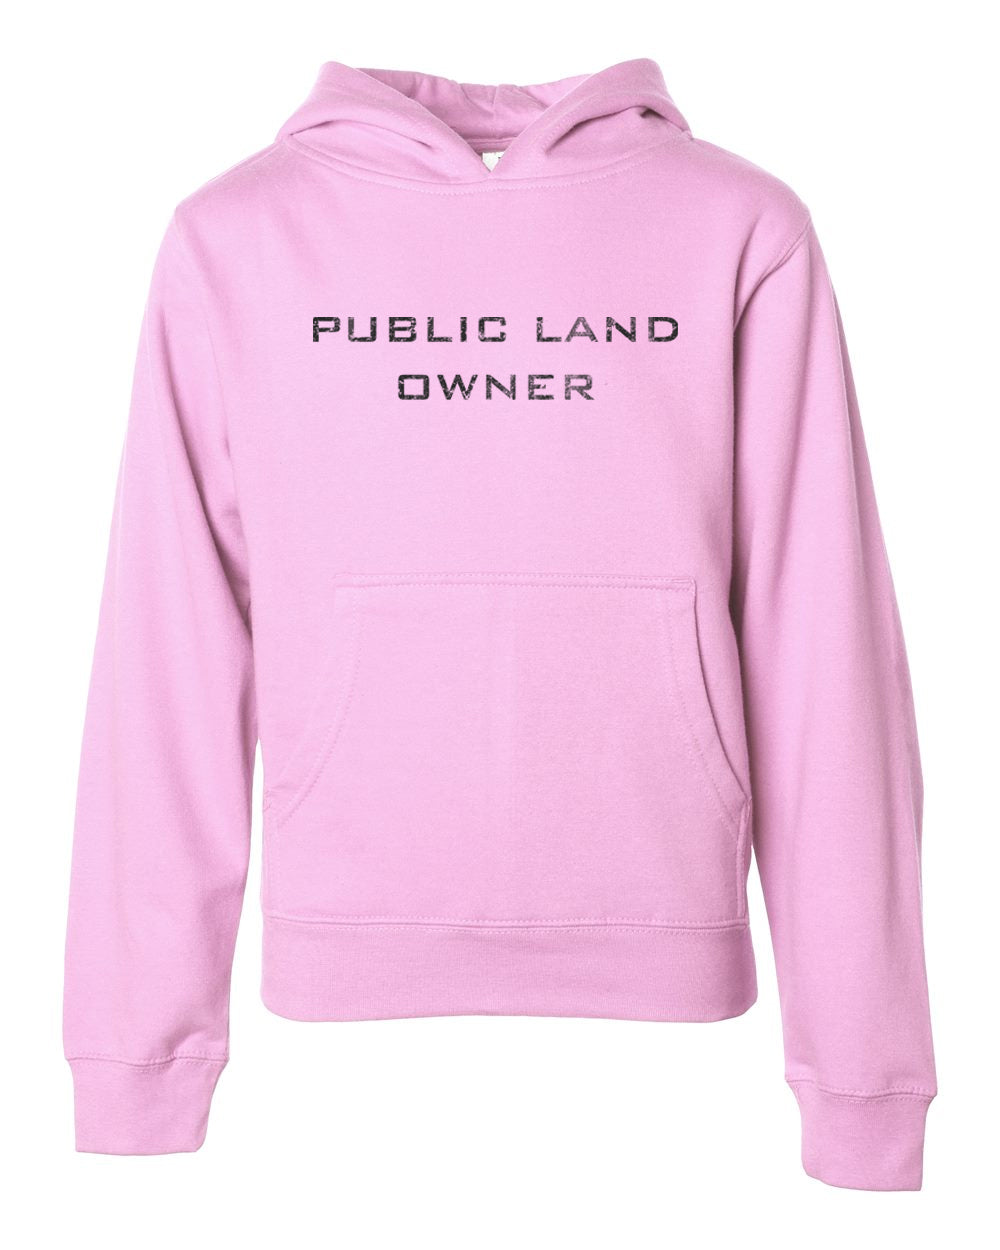 Youth Public Land Owner Sweatshirt - Pink/Logo